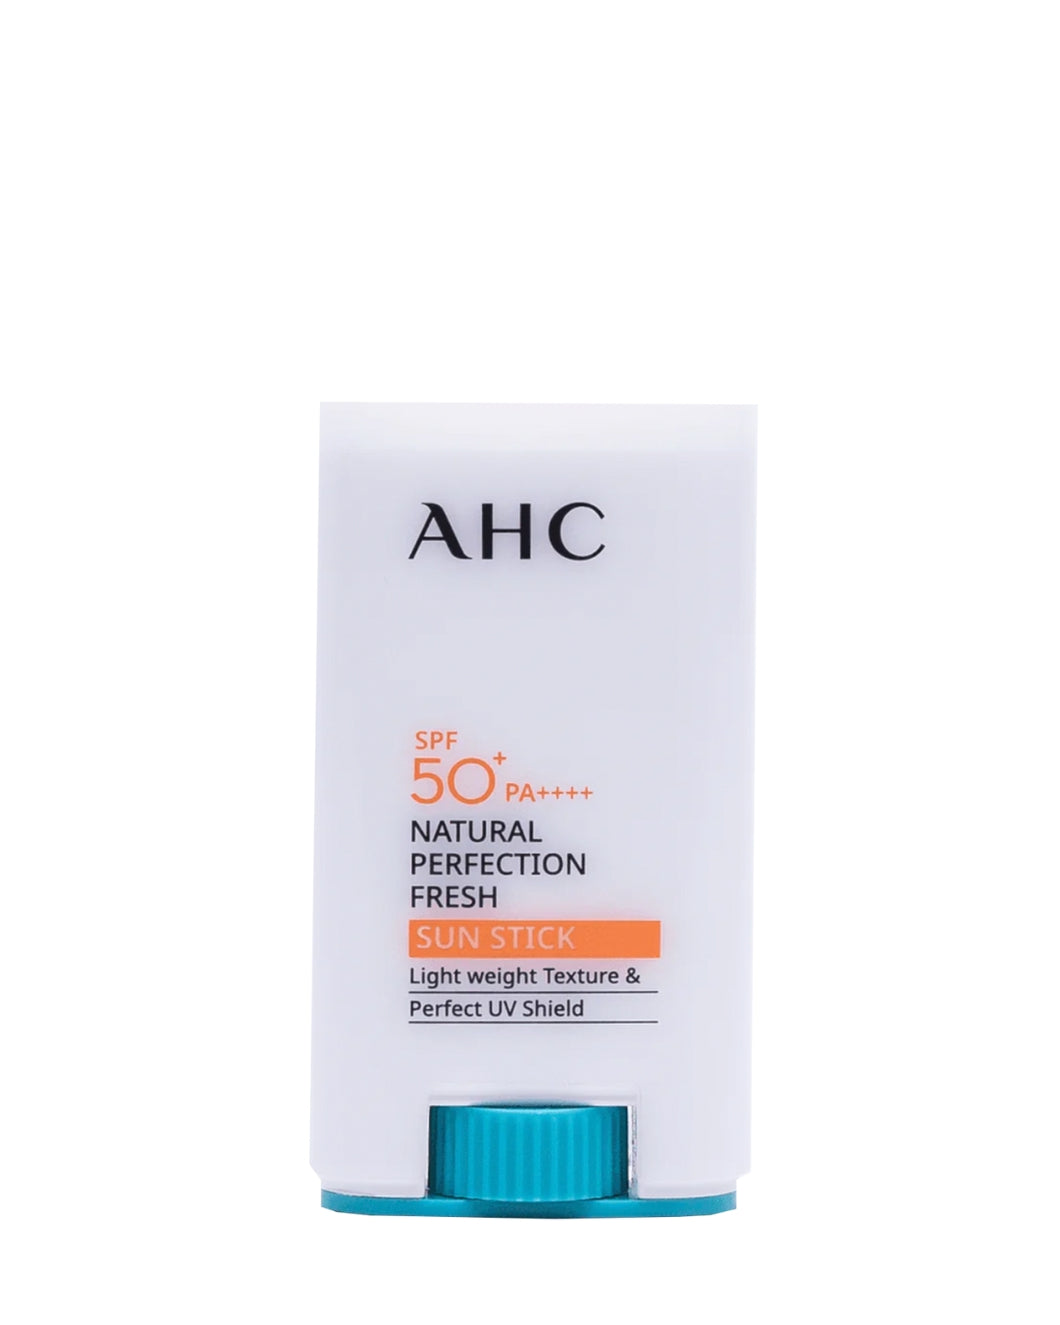 AHC - Natural Perfection Fresh Sun Stick